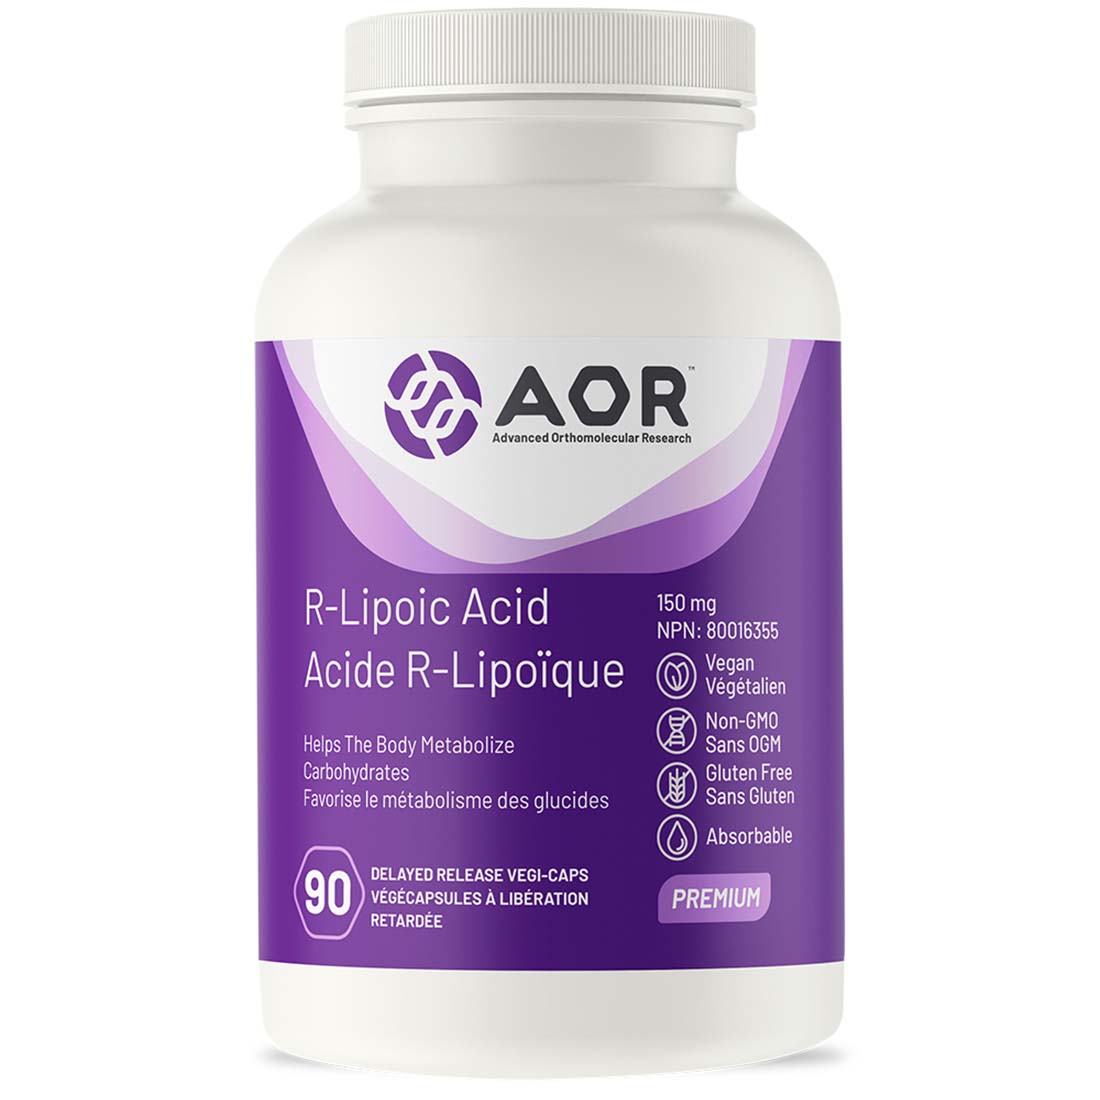 AOR R-Lipoic Acid 150mg, 90 Delayed Release Vegi-Capsules